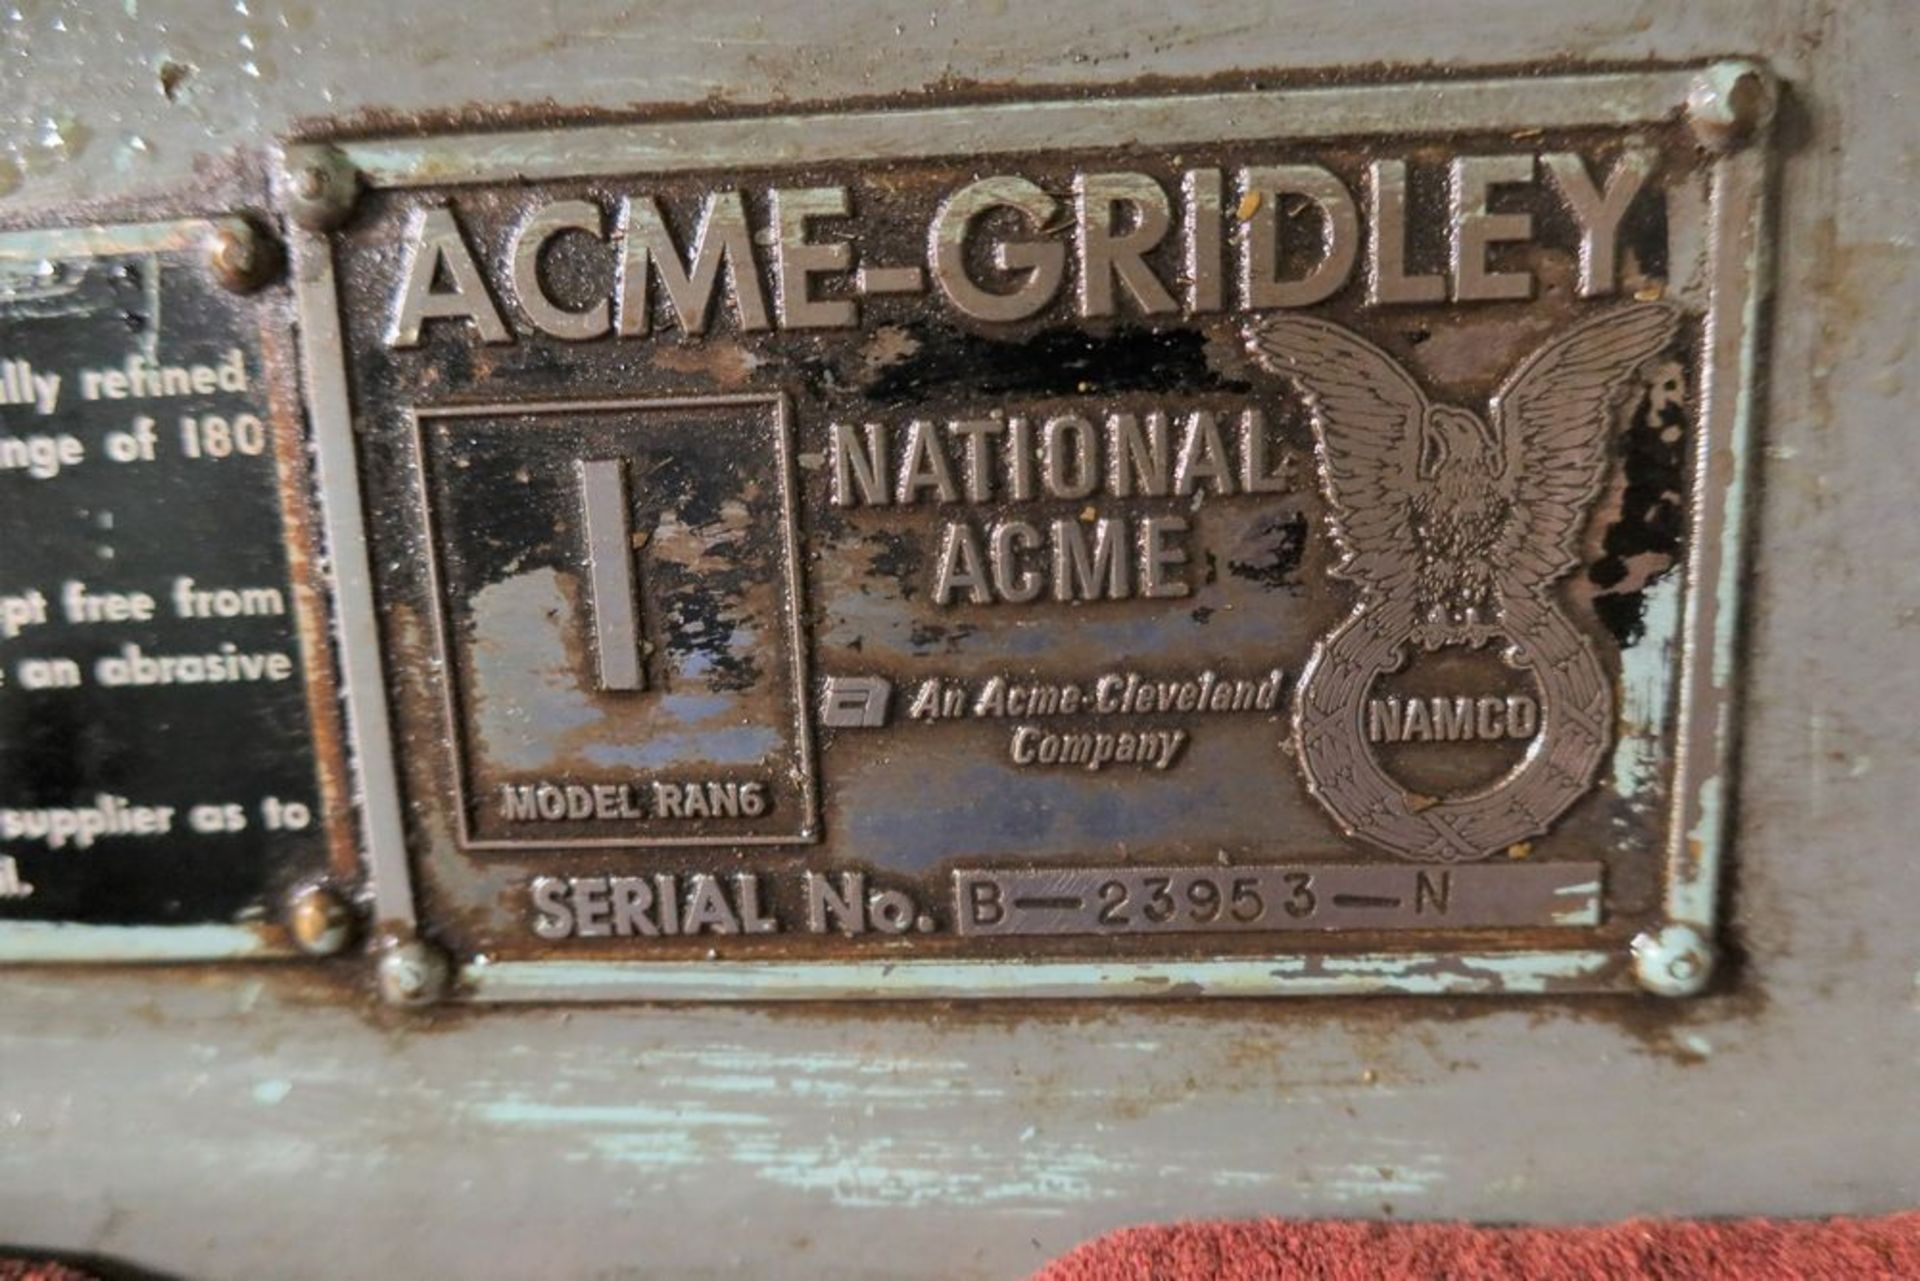 1" NATIONAL ACME RAN-6 6-SPINDLE AUTOMATIC BAR SCREW MACHINE, S/N B23953-N - Image 5 of 5